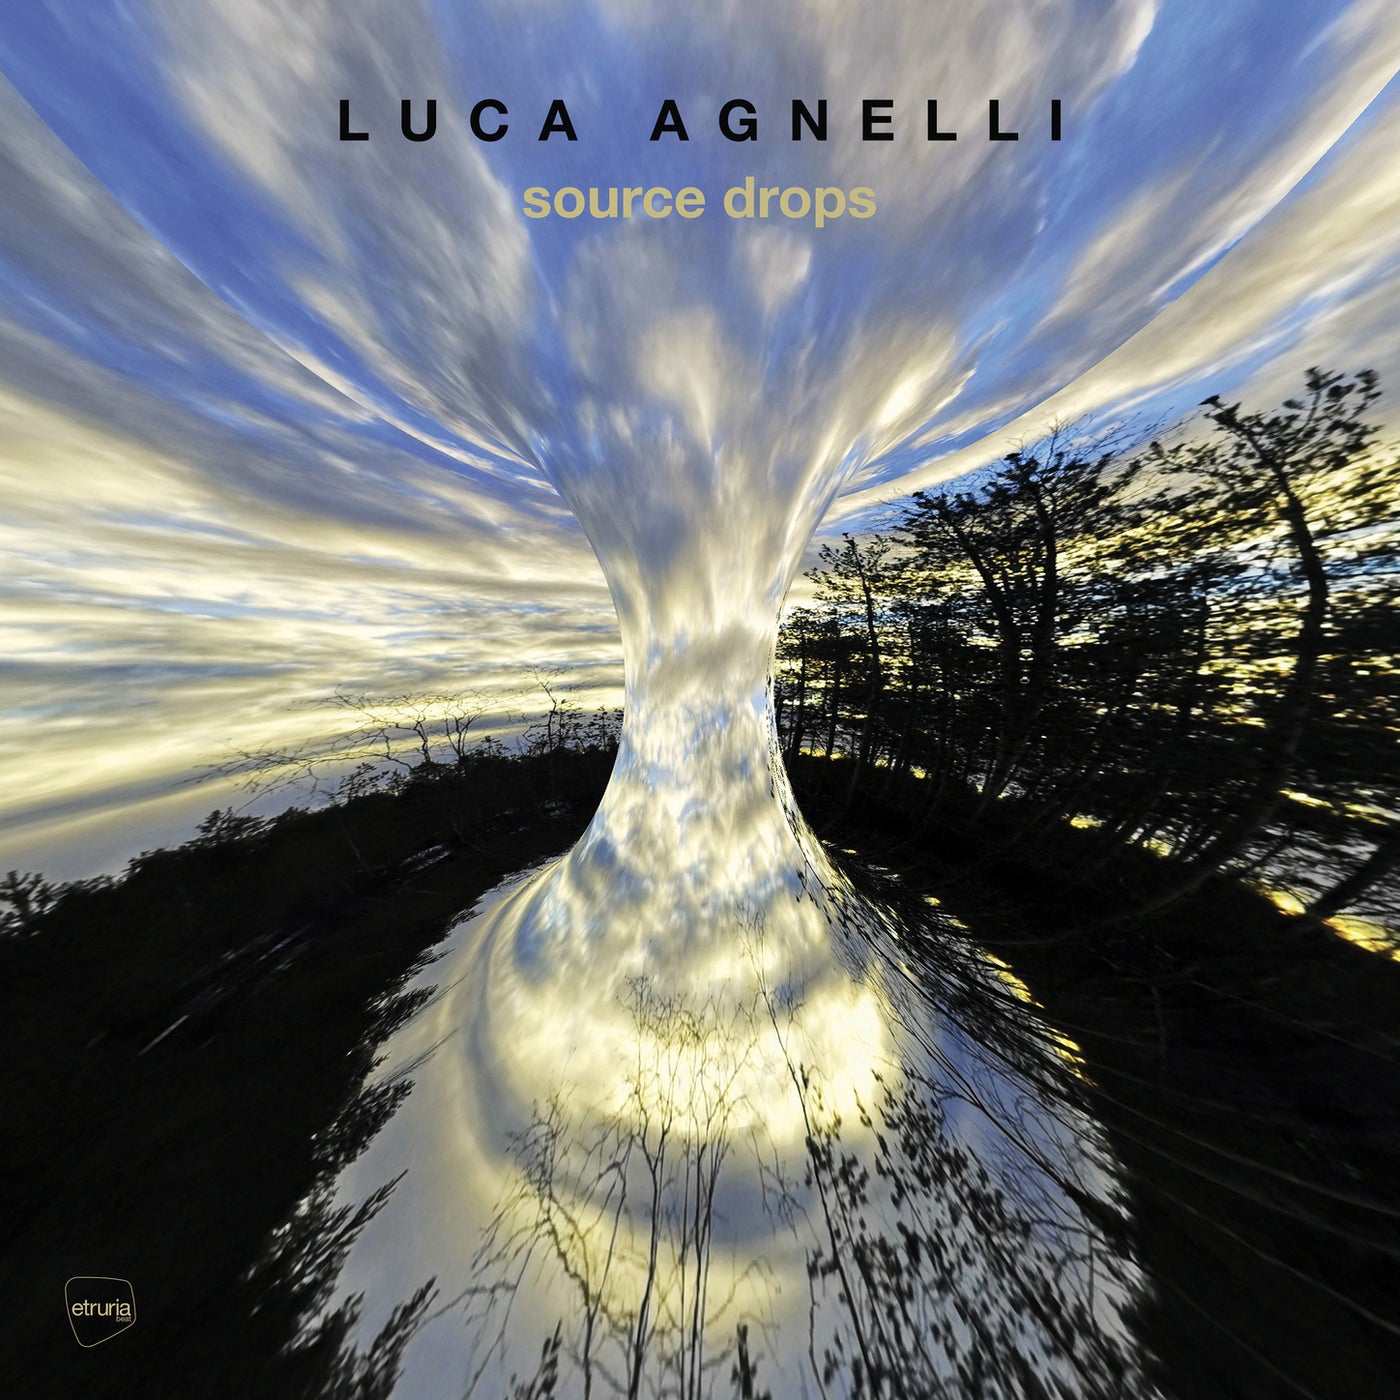 Luca Agnelli - Source Drops [ETB070]